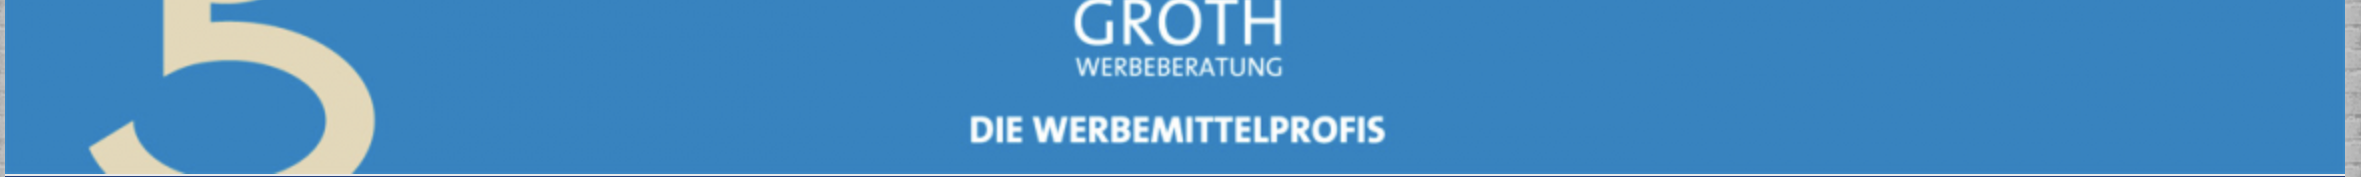 Logo_Groth_Werbeberatung